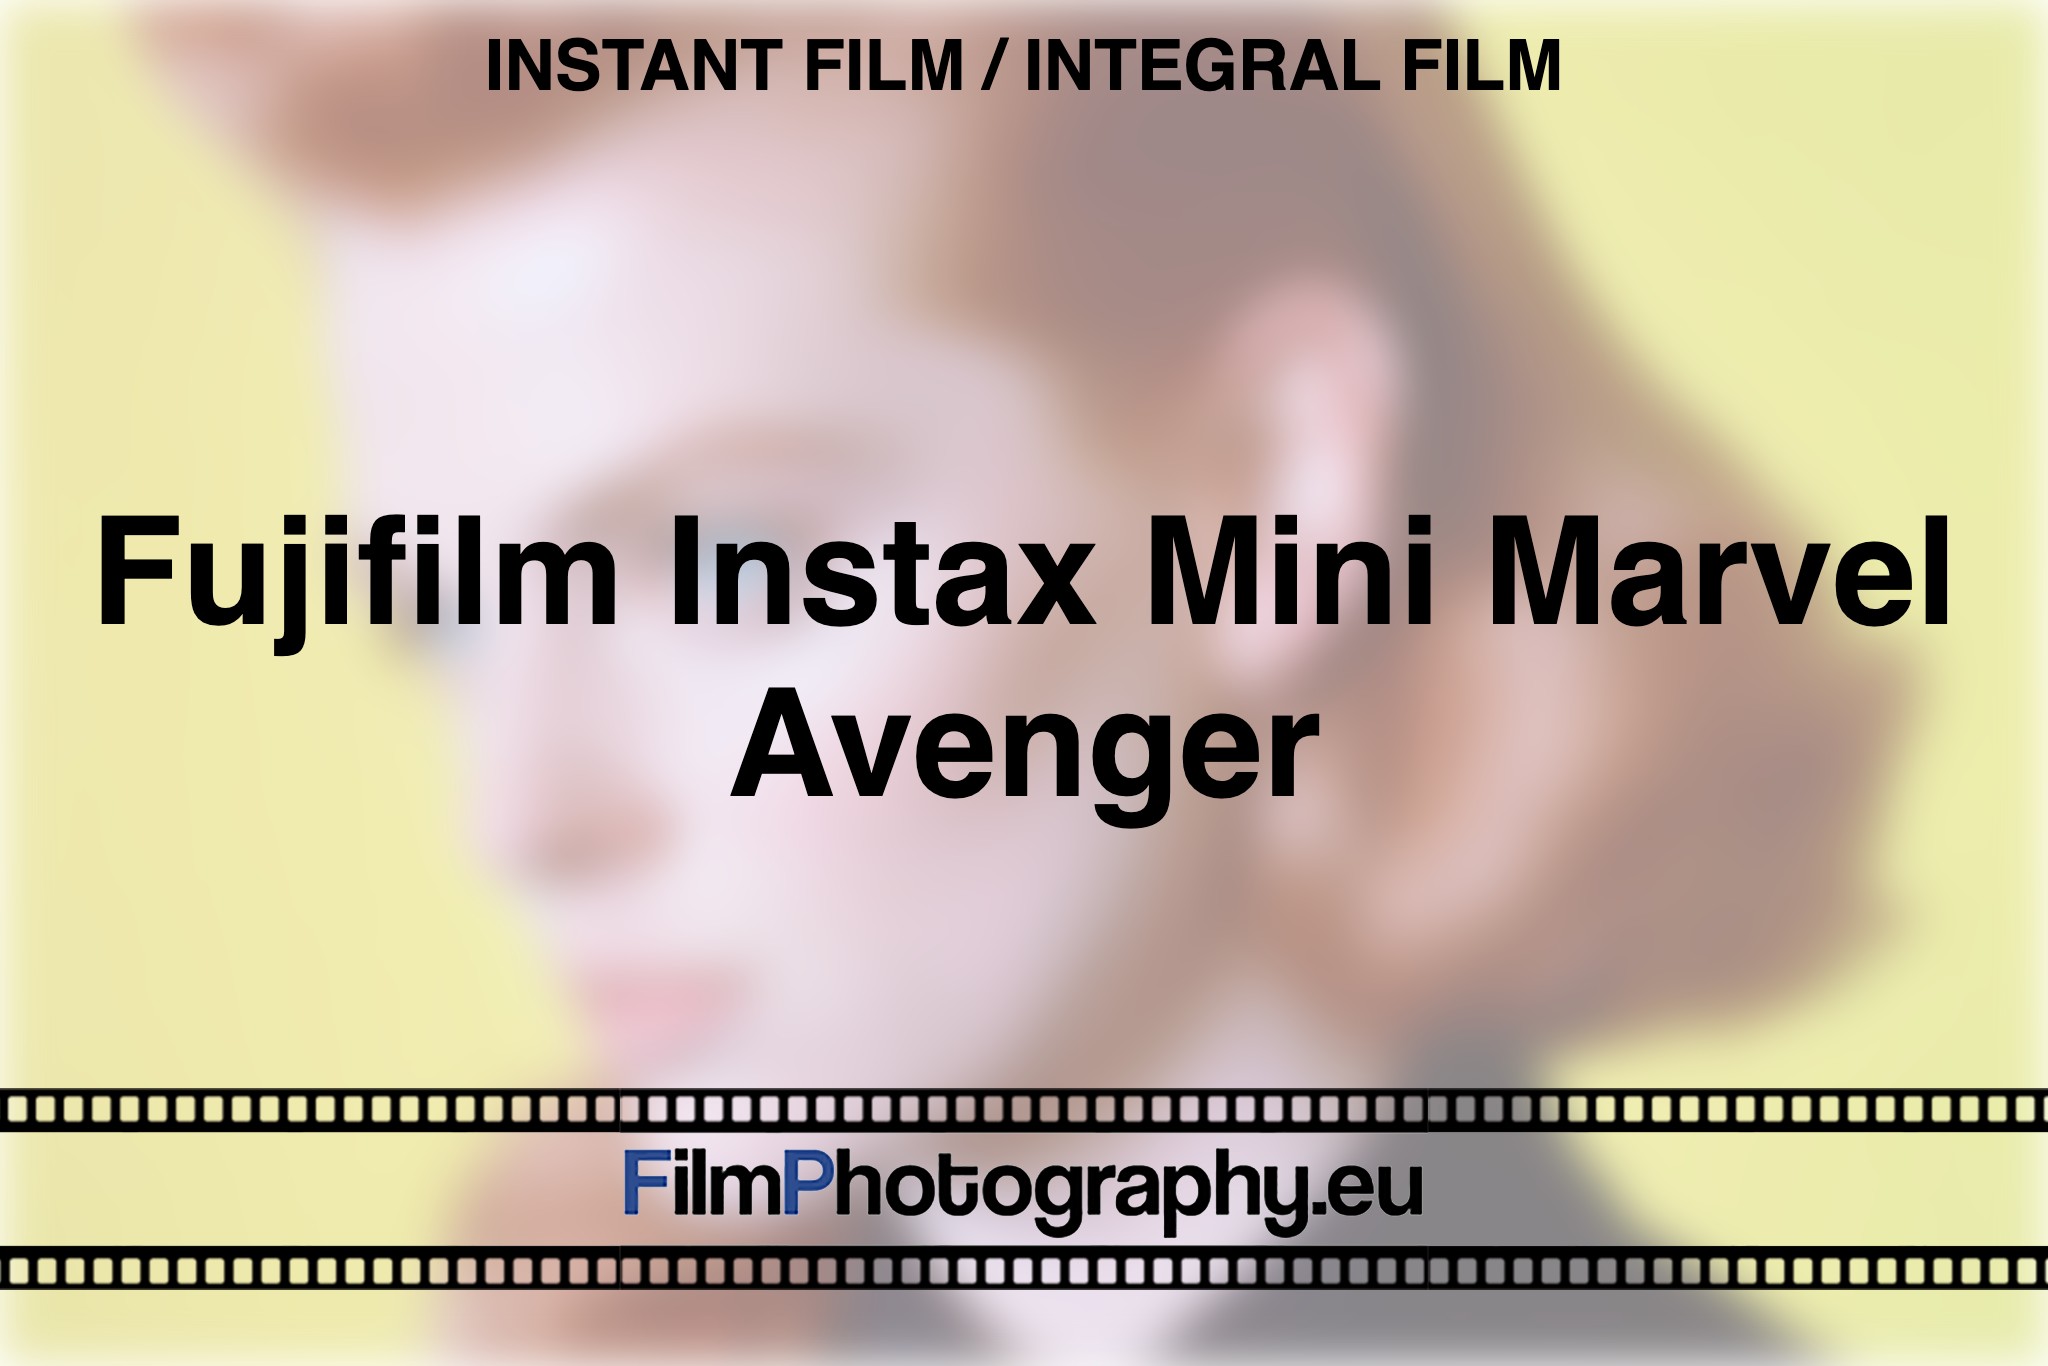 fujifilm-instax-mini-marvel-avenger-instant-film-integral-film-bnv